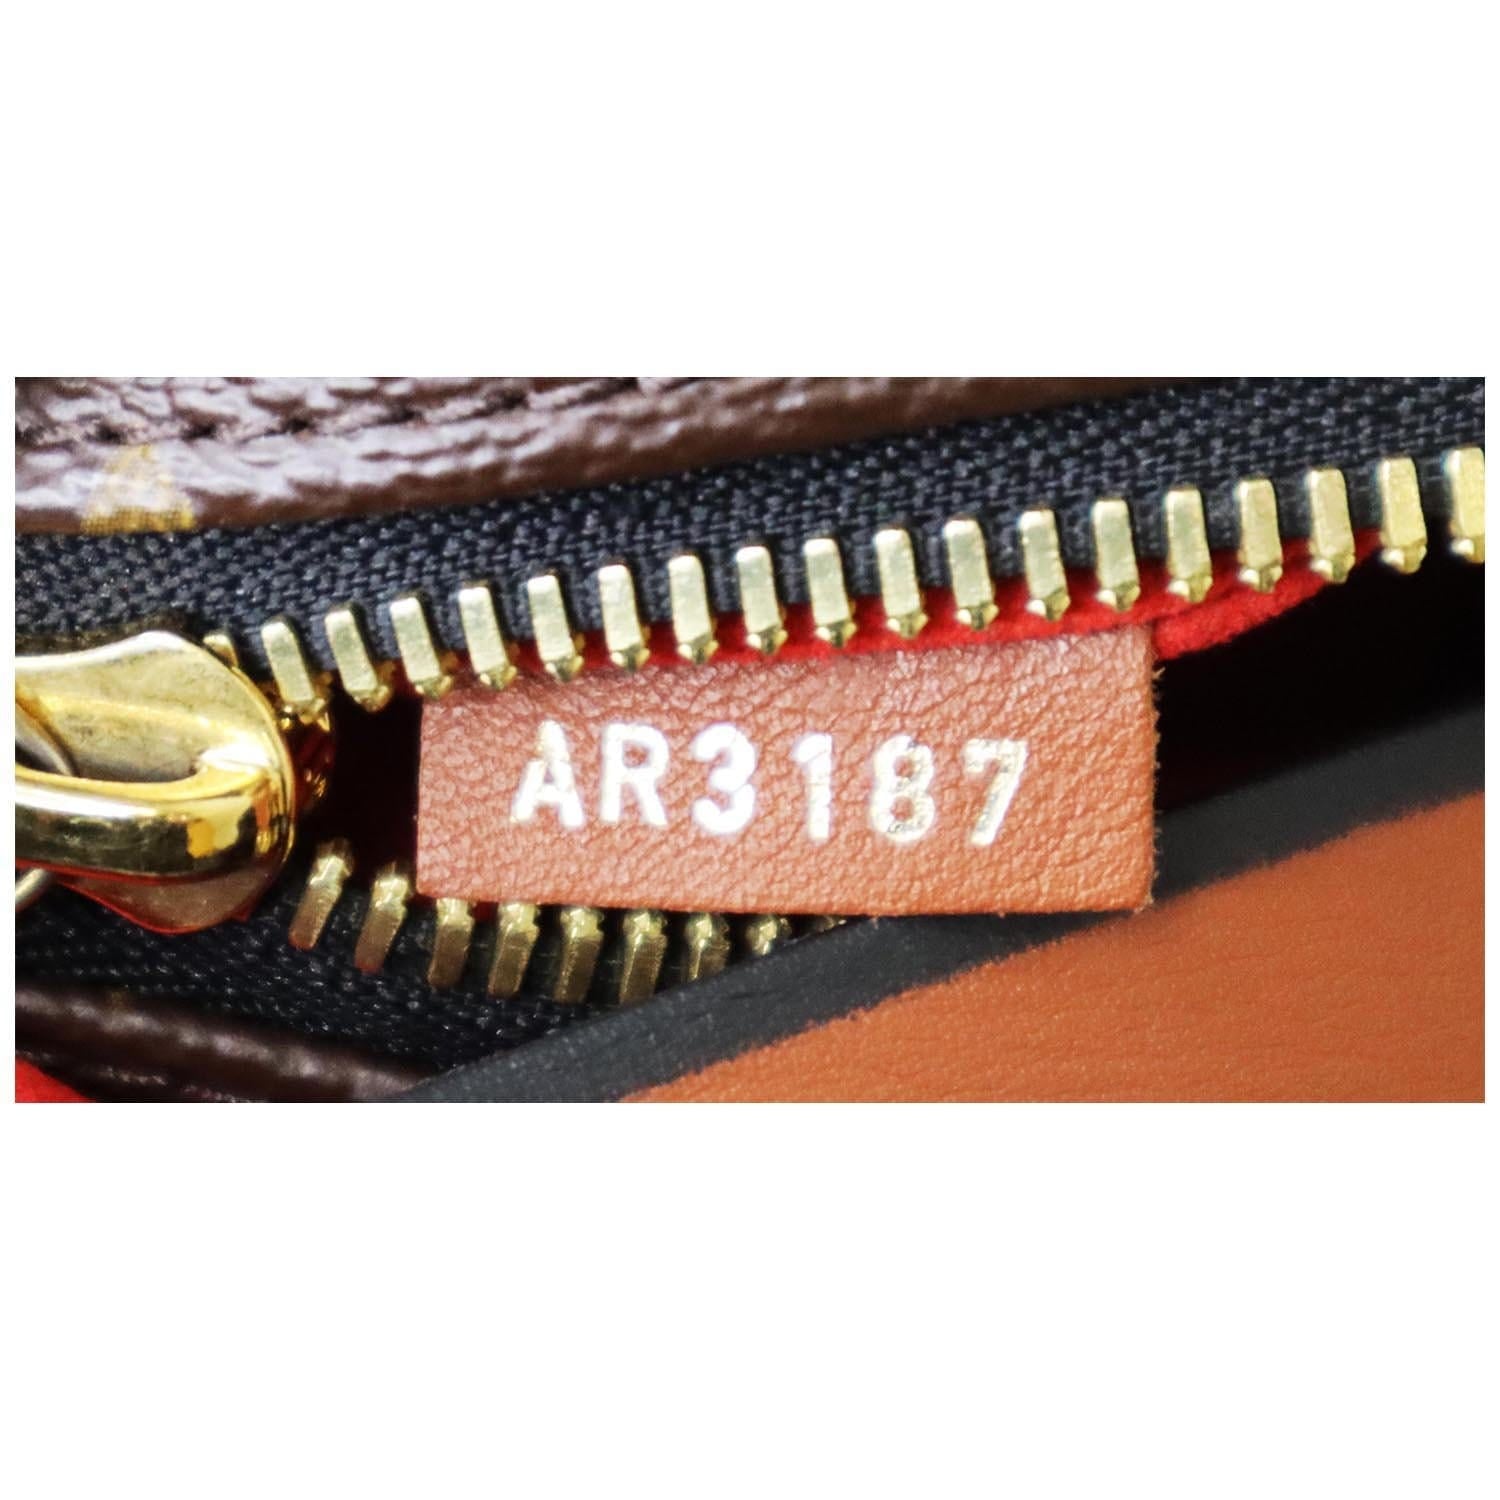 M43157 Louis Vuitton 2017 Monogram Tuileries Besace Handbag-Caramel